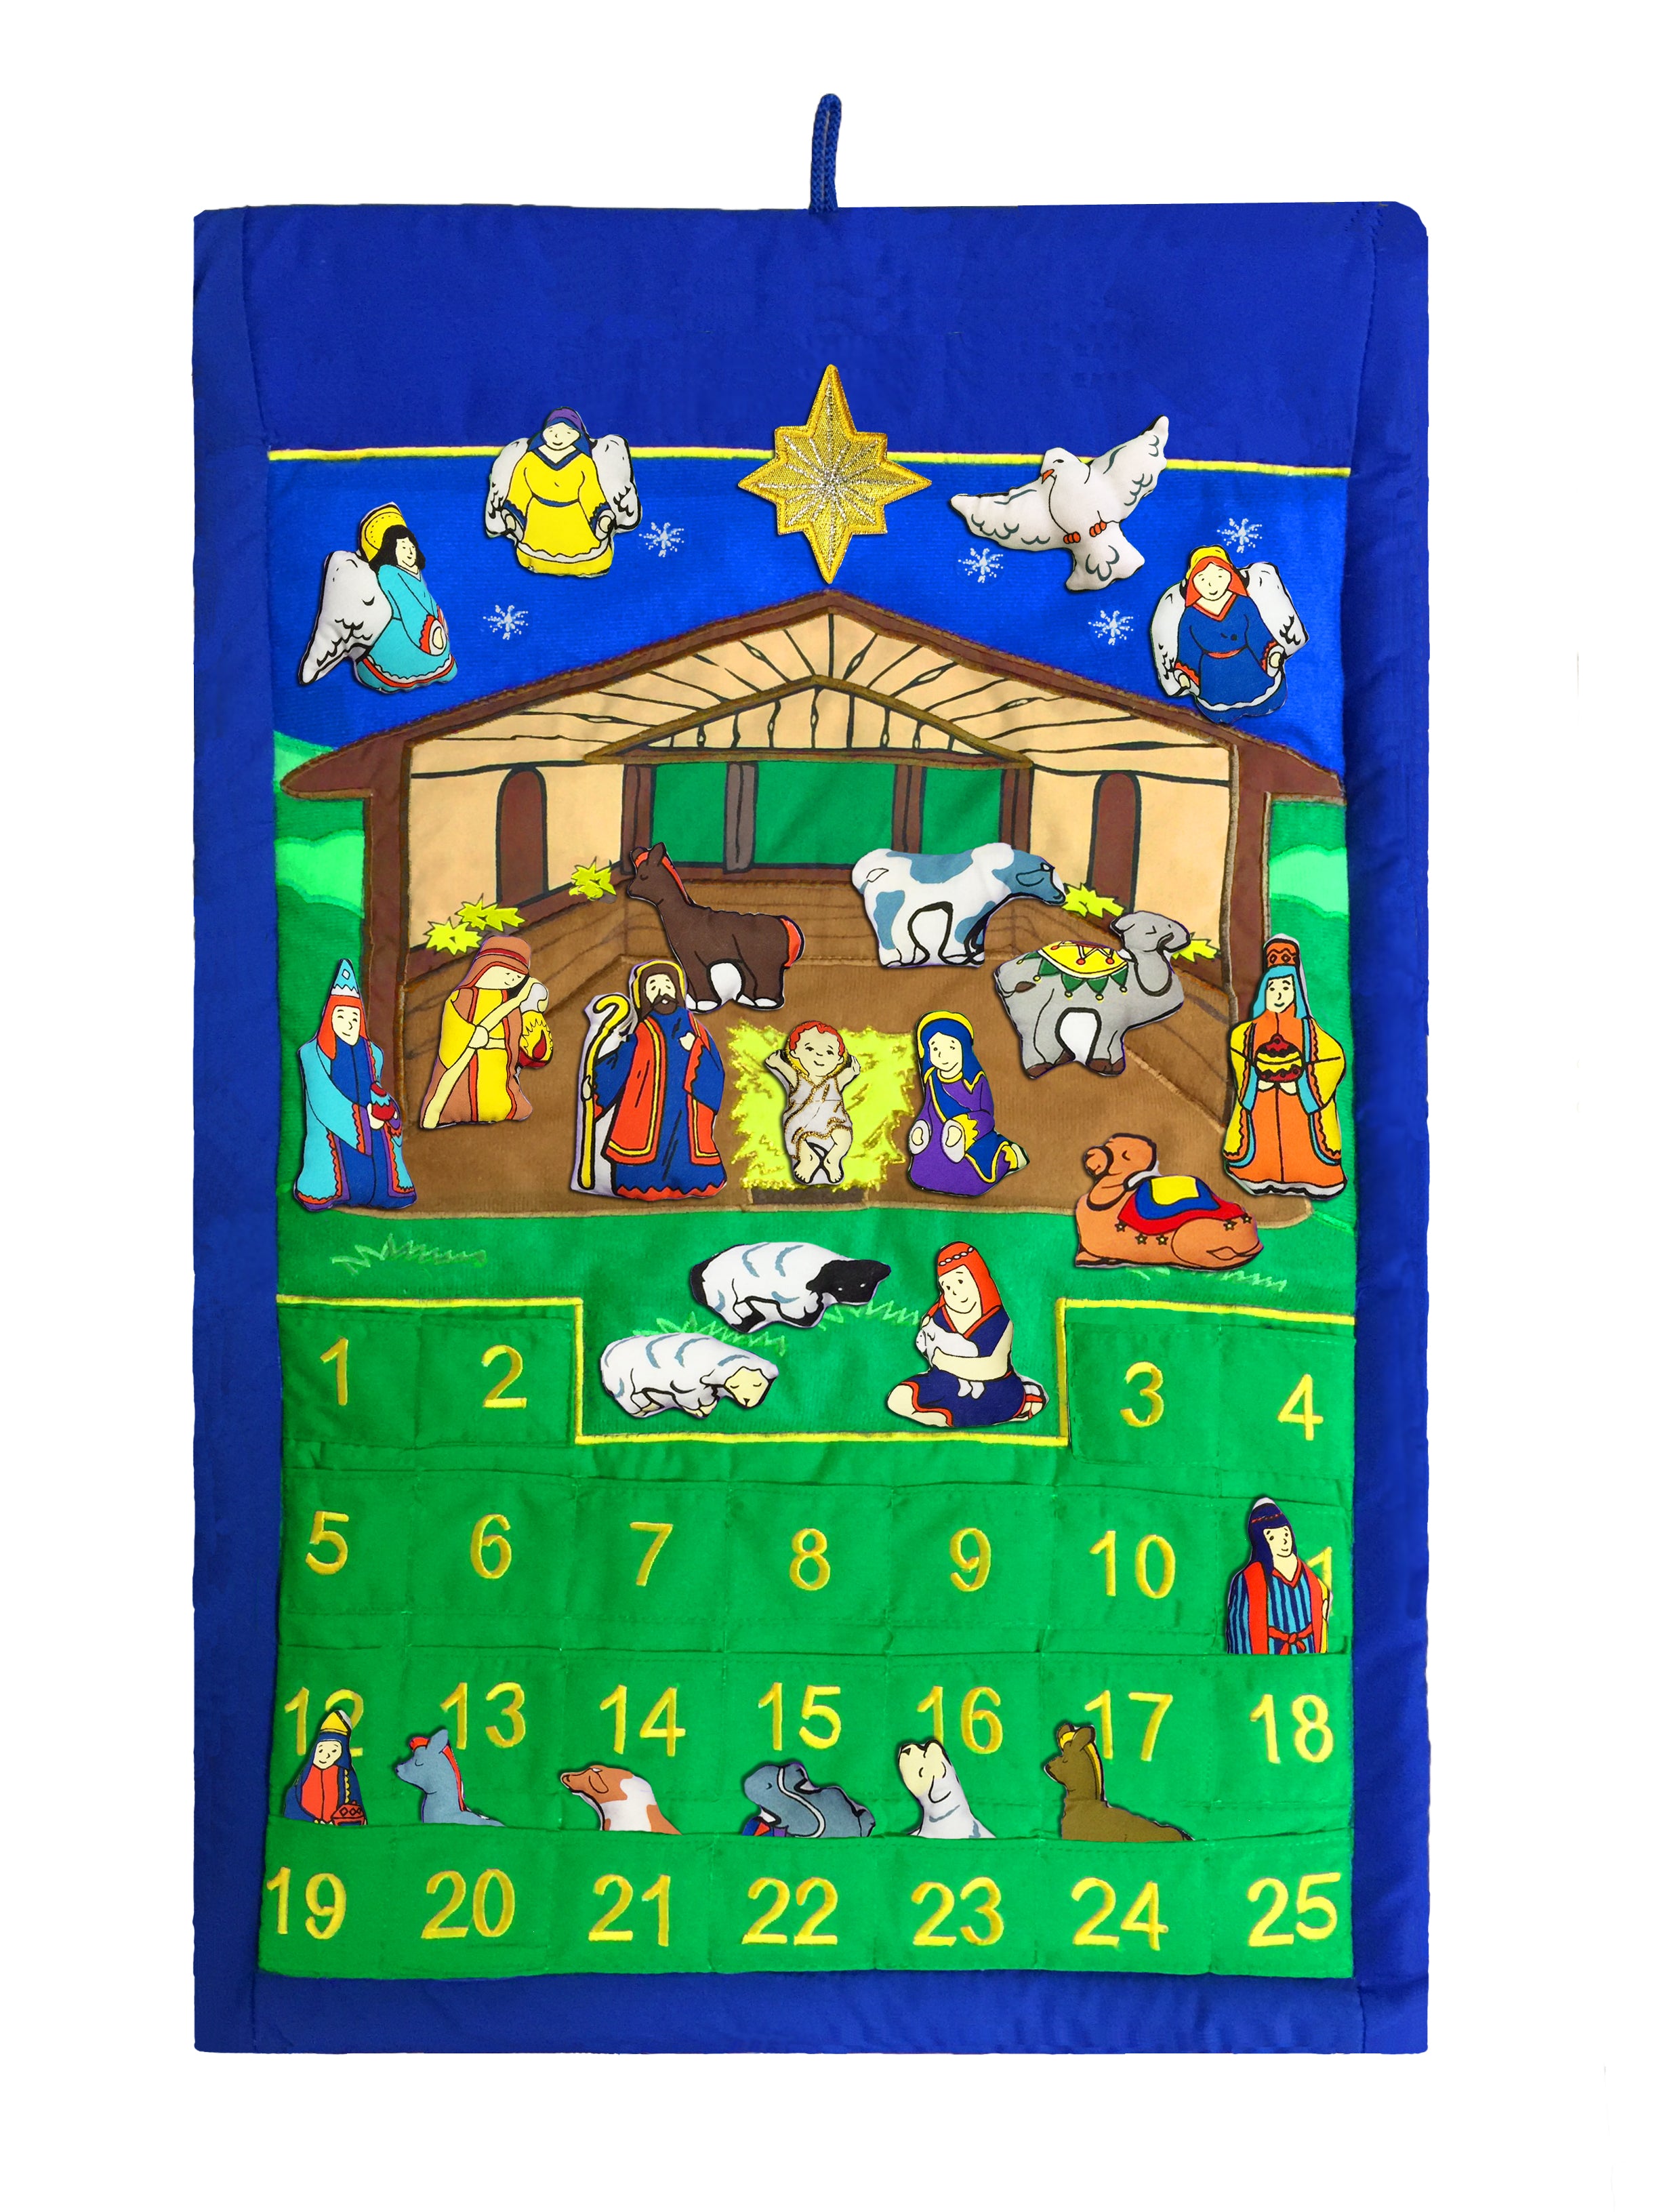 Nativity Manger Advent Calendar With "Peace On Earth"